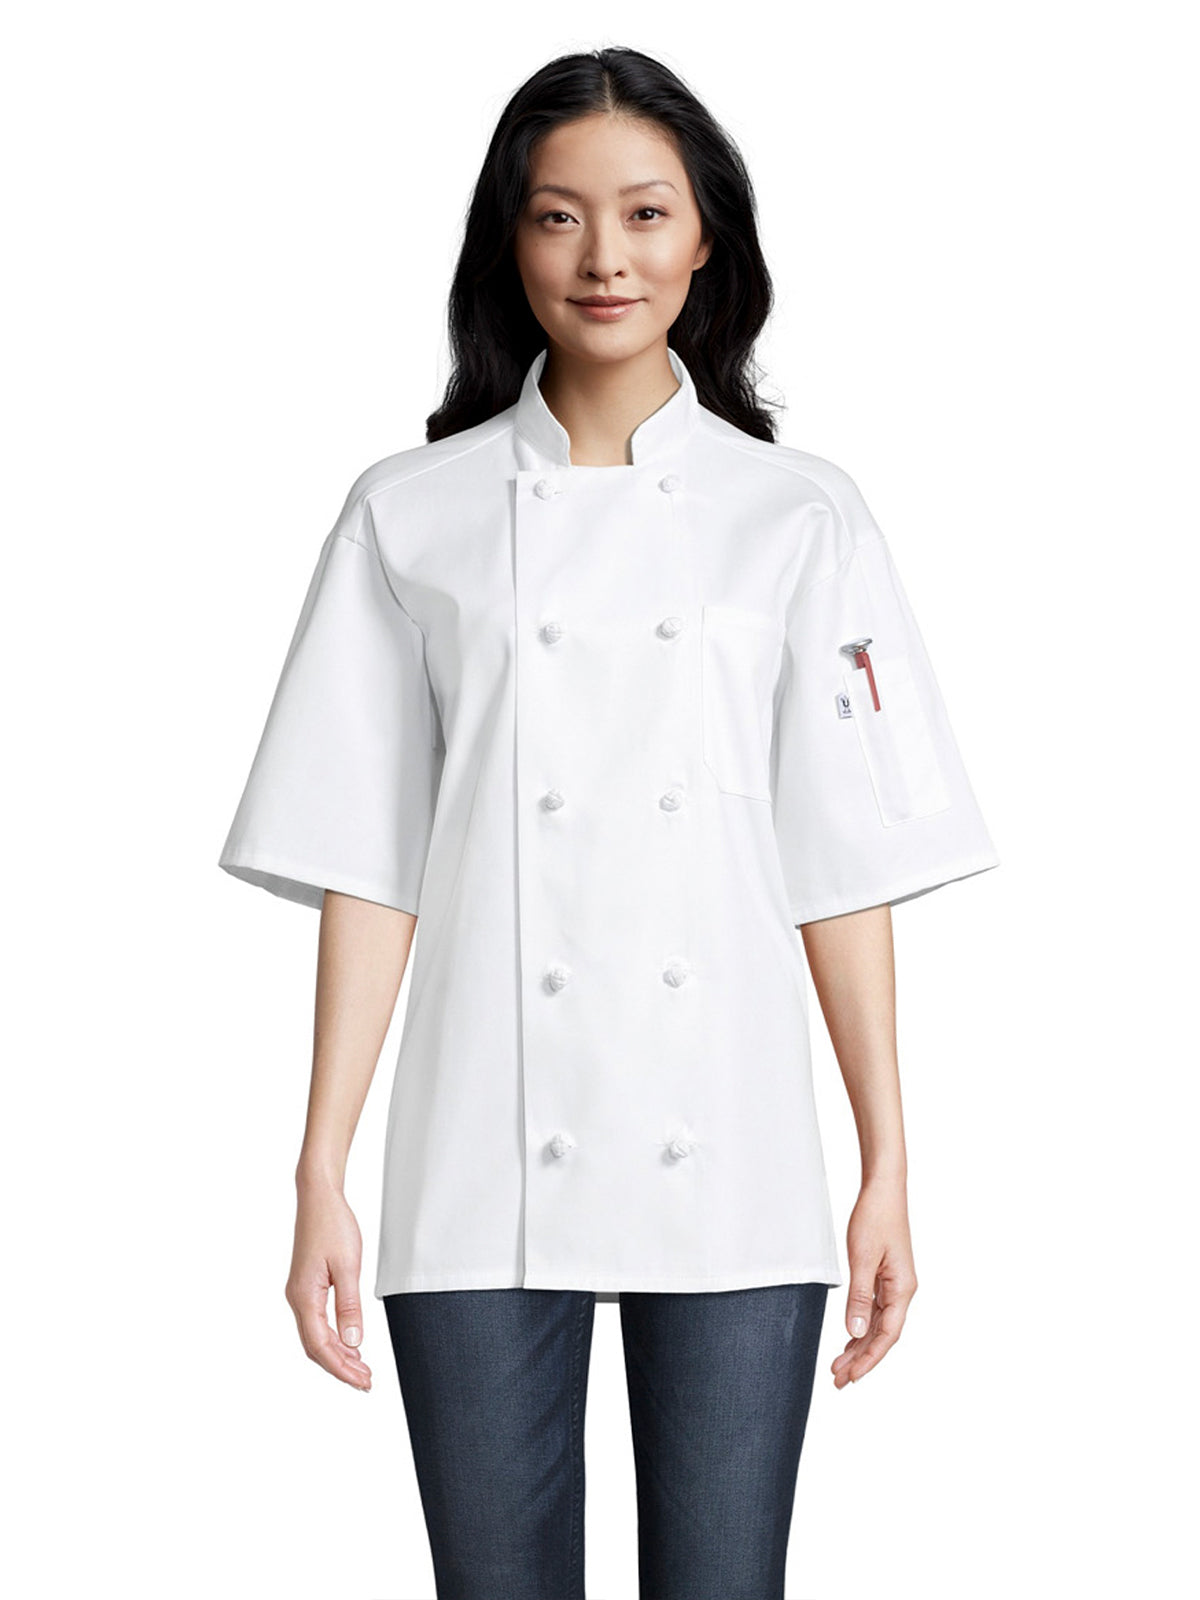 Unisex Chef's Coat - 0430 - White